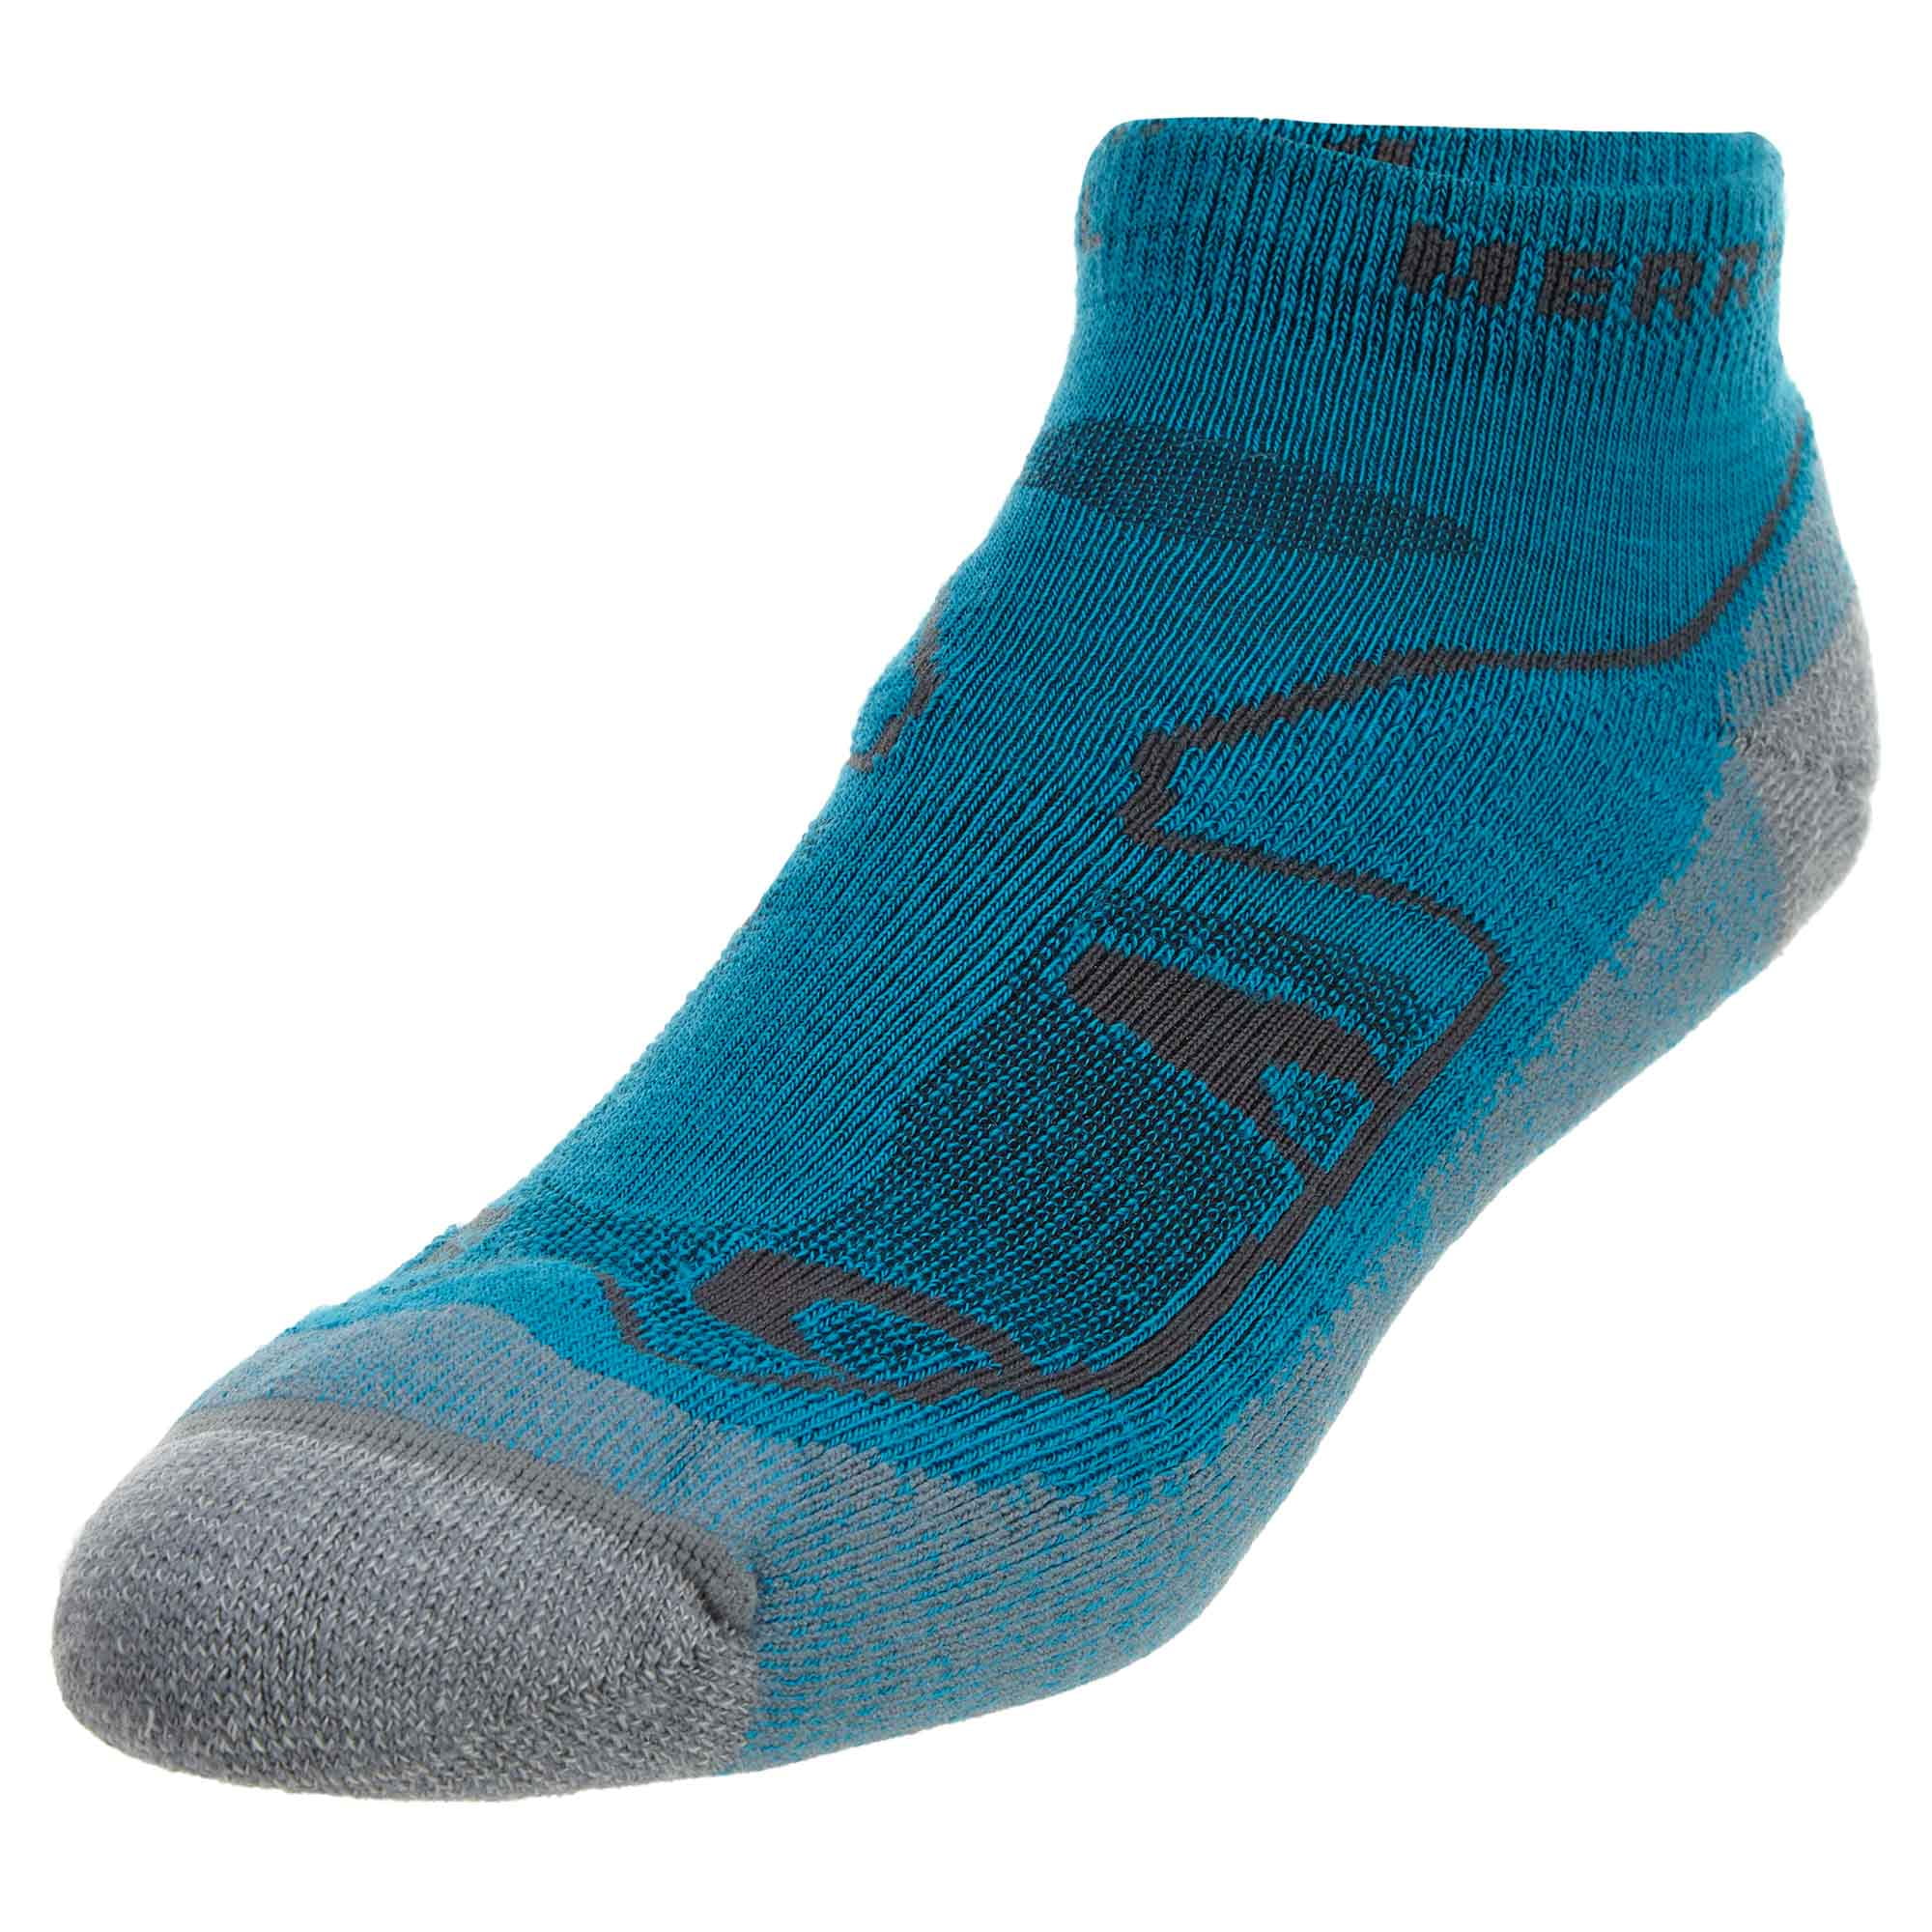 Merrell Siren Sport Socks Womens Style : Jsf10095 - Walmart.com